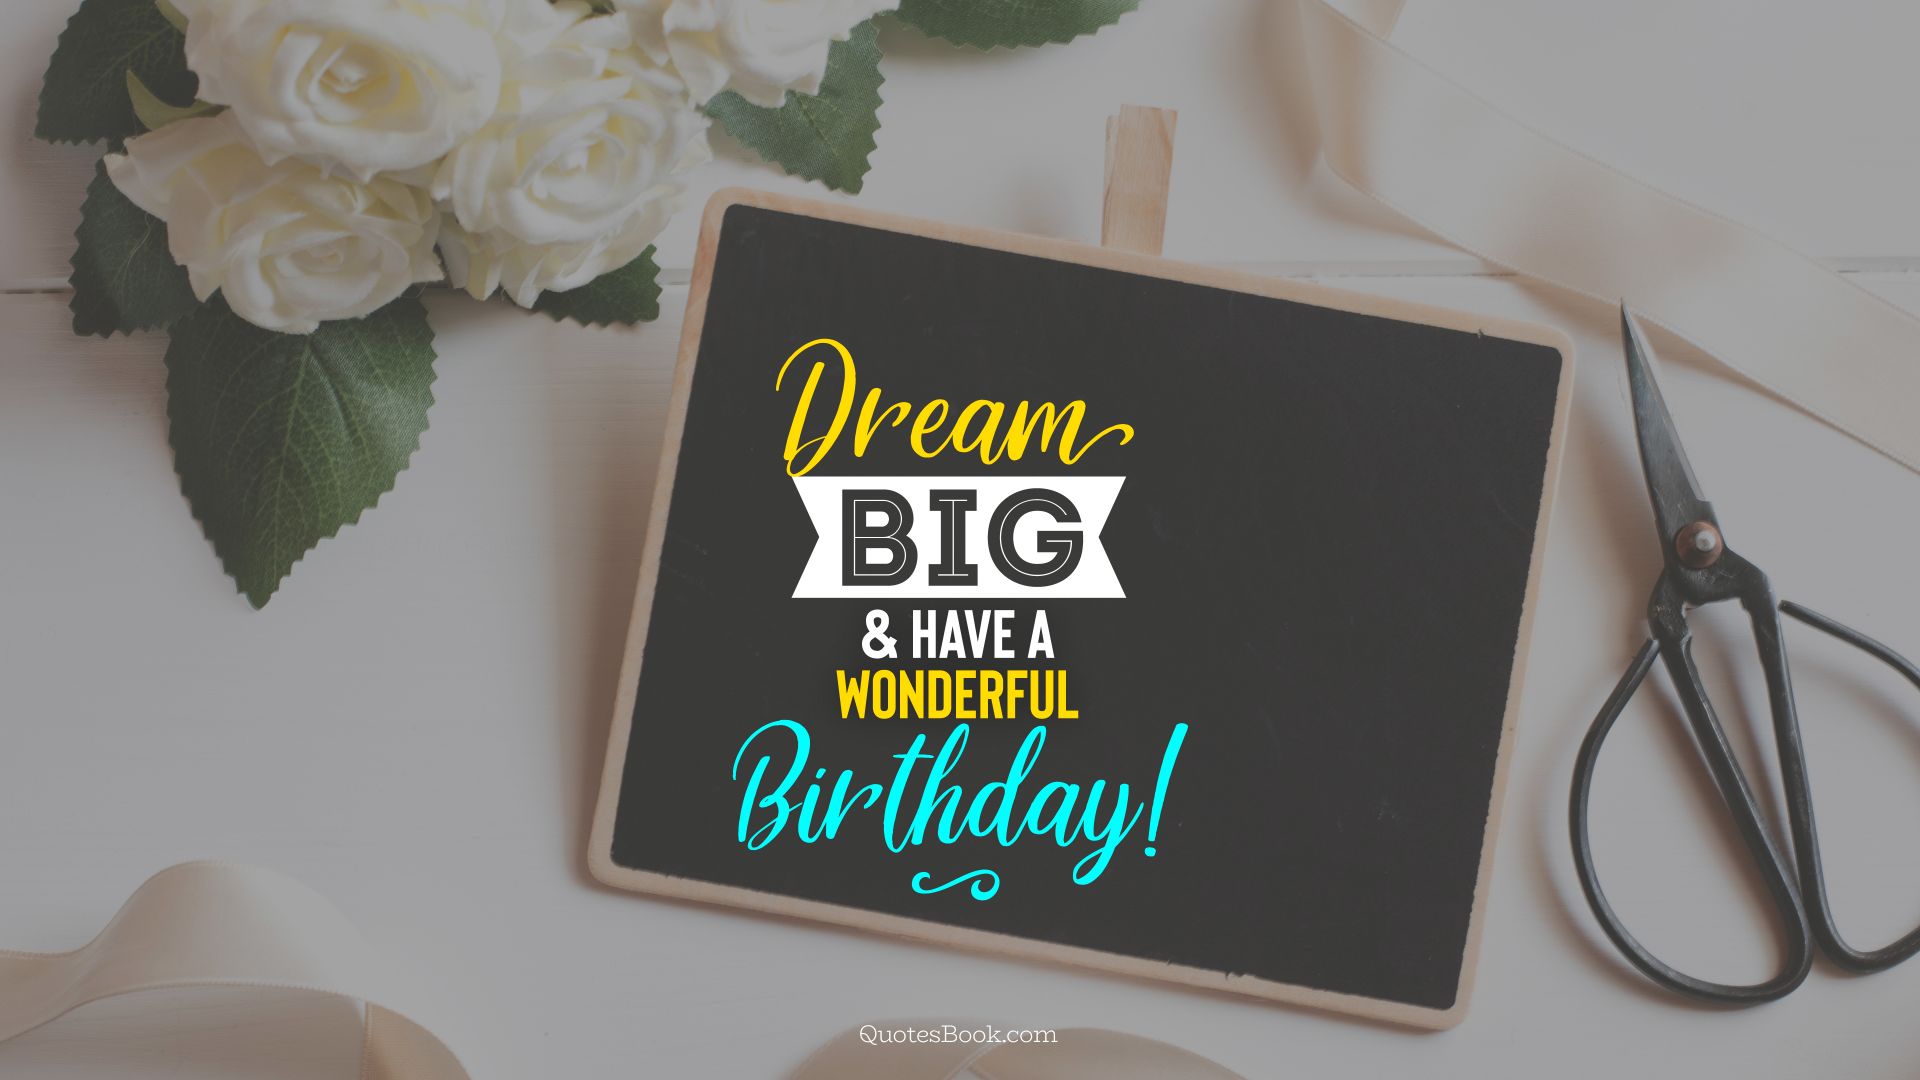 Dream big and have a wonderful birthday!